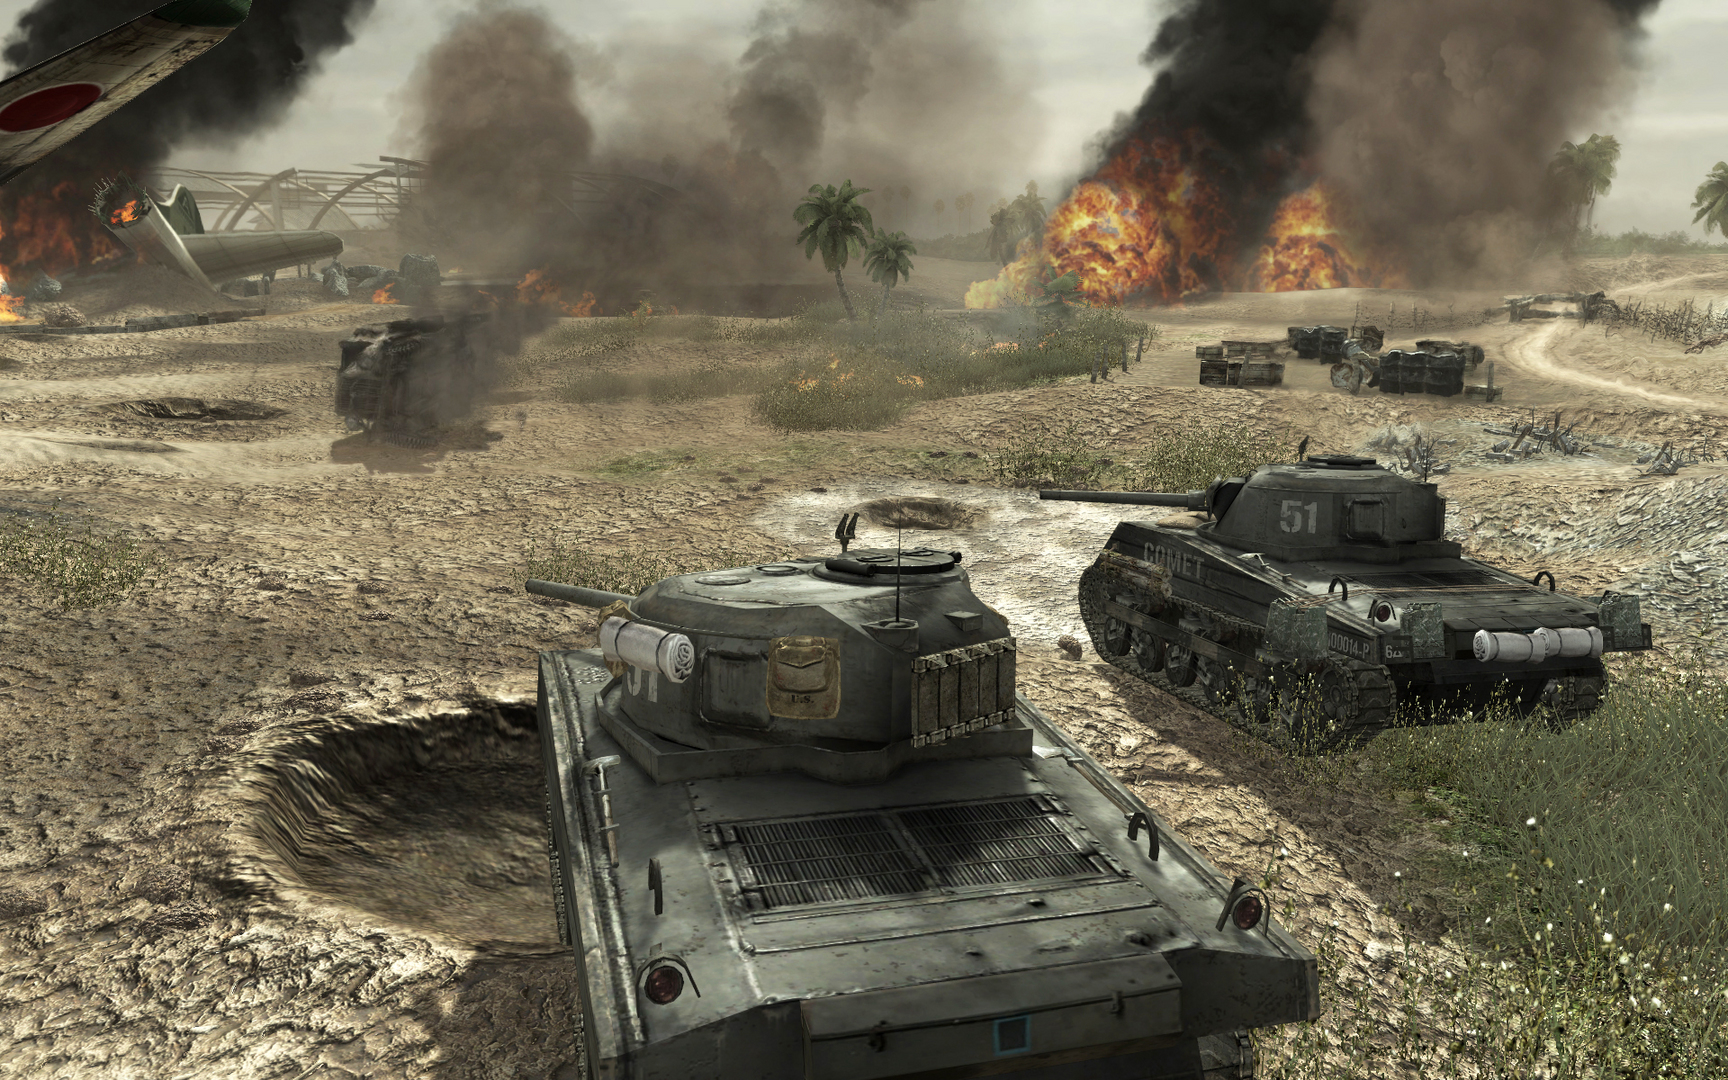 Call of Duty: World at War screenshot 2